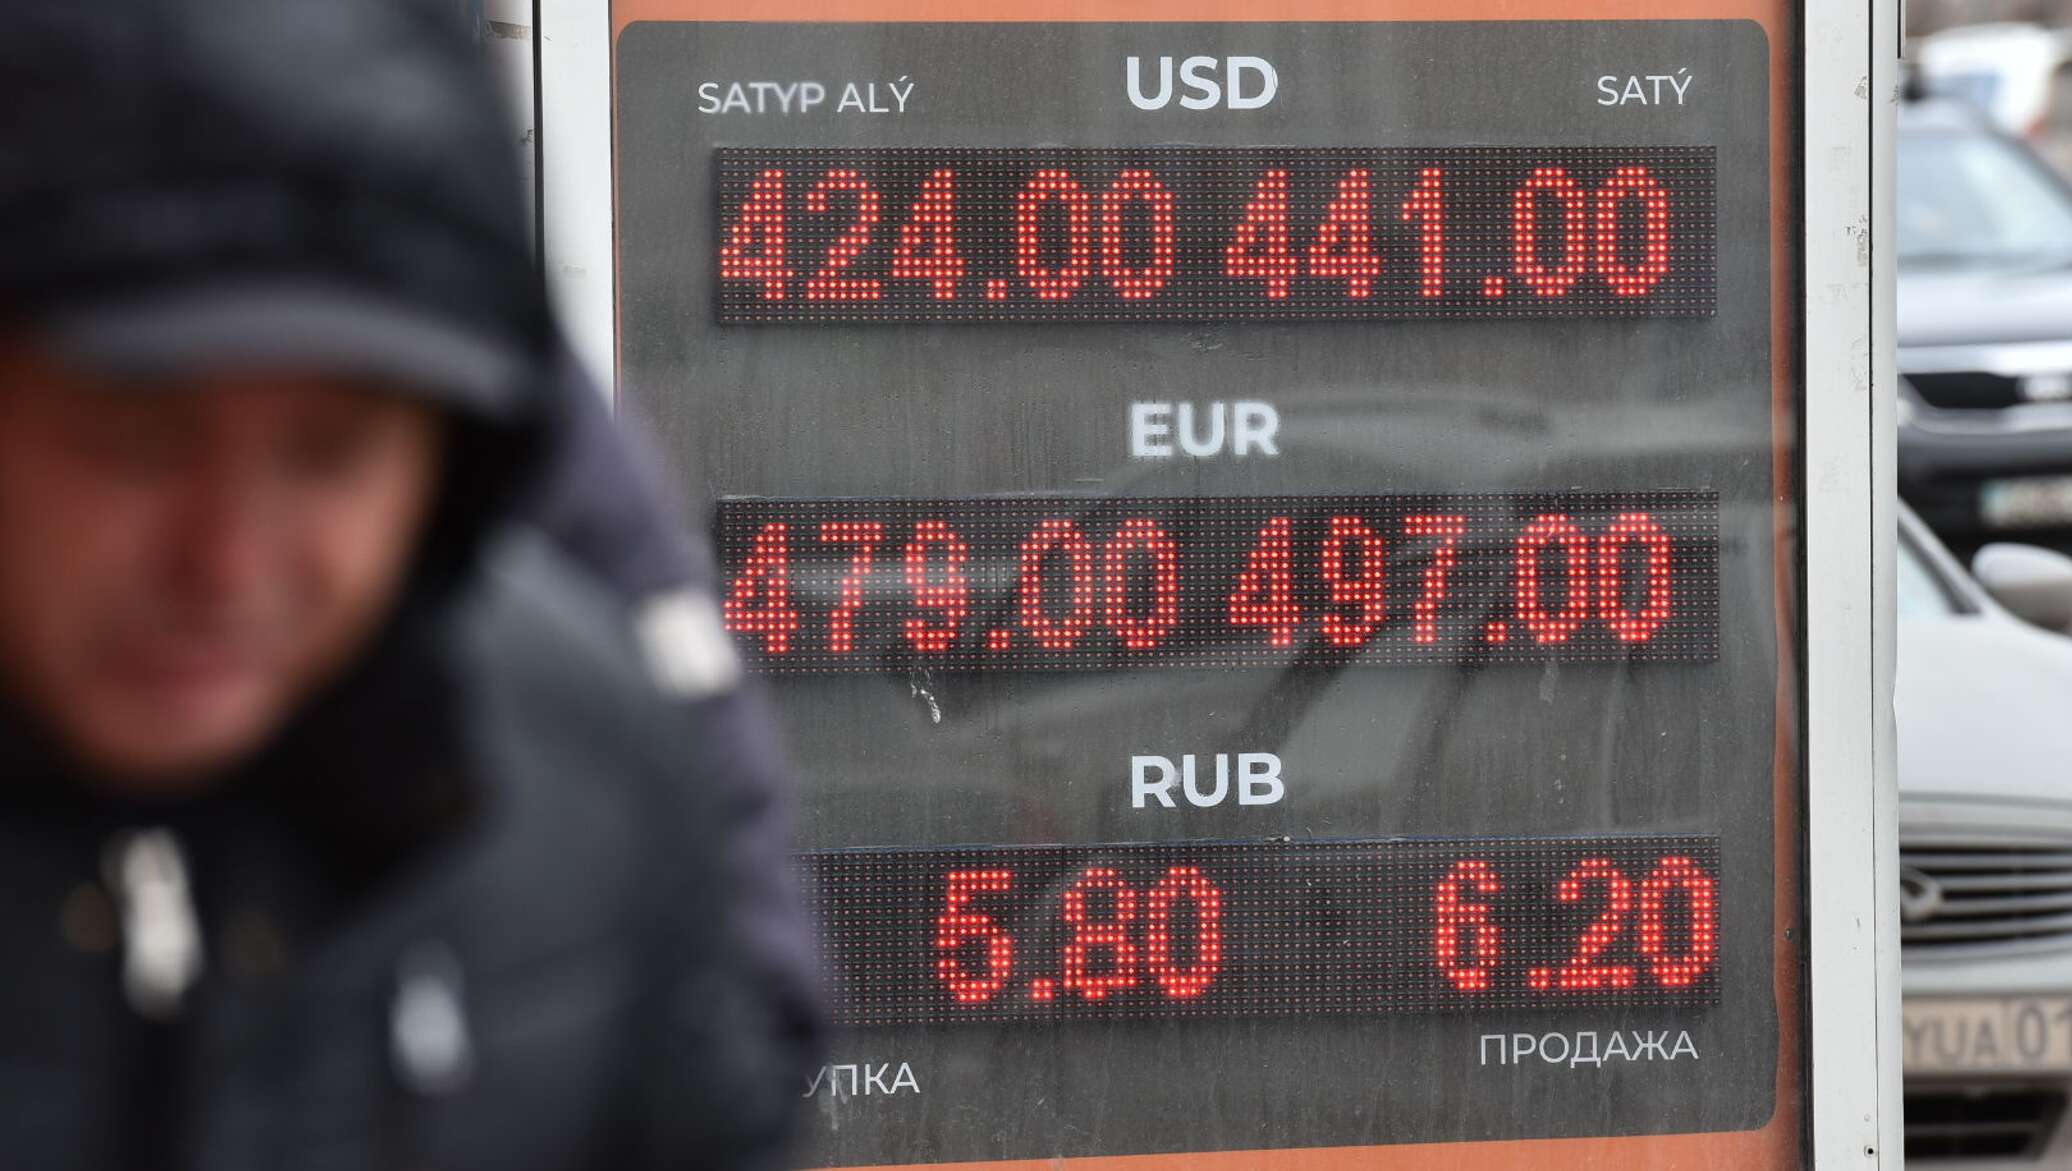 Обменный пункт рубль тенге казахстане. Курс тенге к доллару. Пункт обмена валюты в Казахстане. Курс валют в Казахстане на сегодня в обменниках. Доллар на март 2013 года.